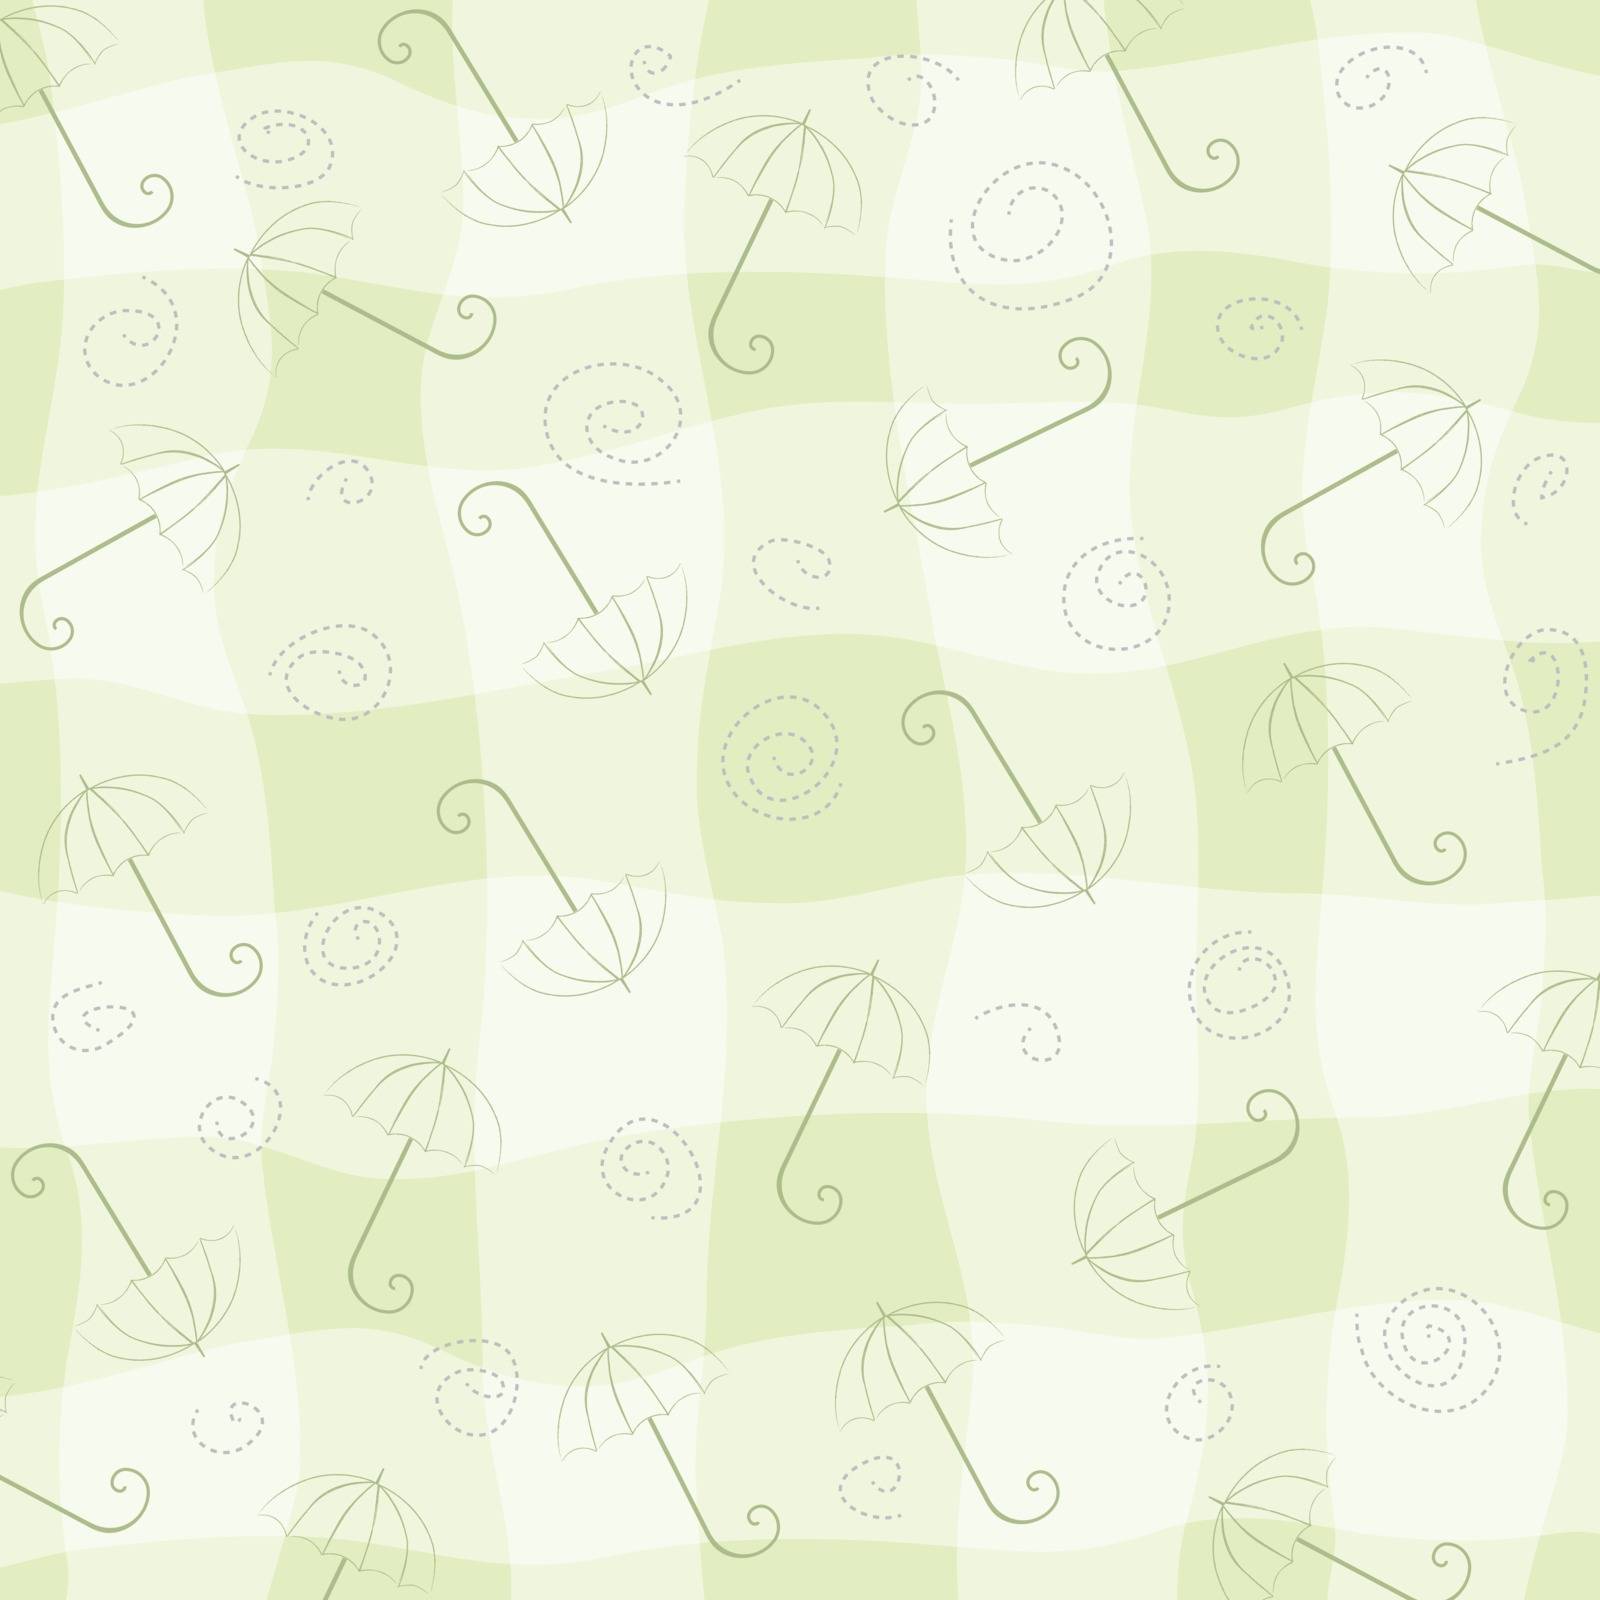 childish seamless pattern with umbrellas, vector illustration